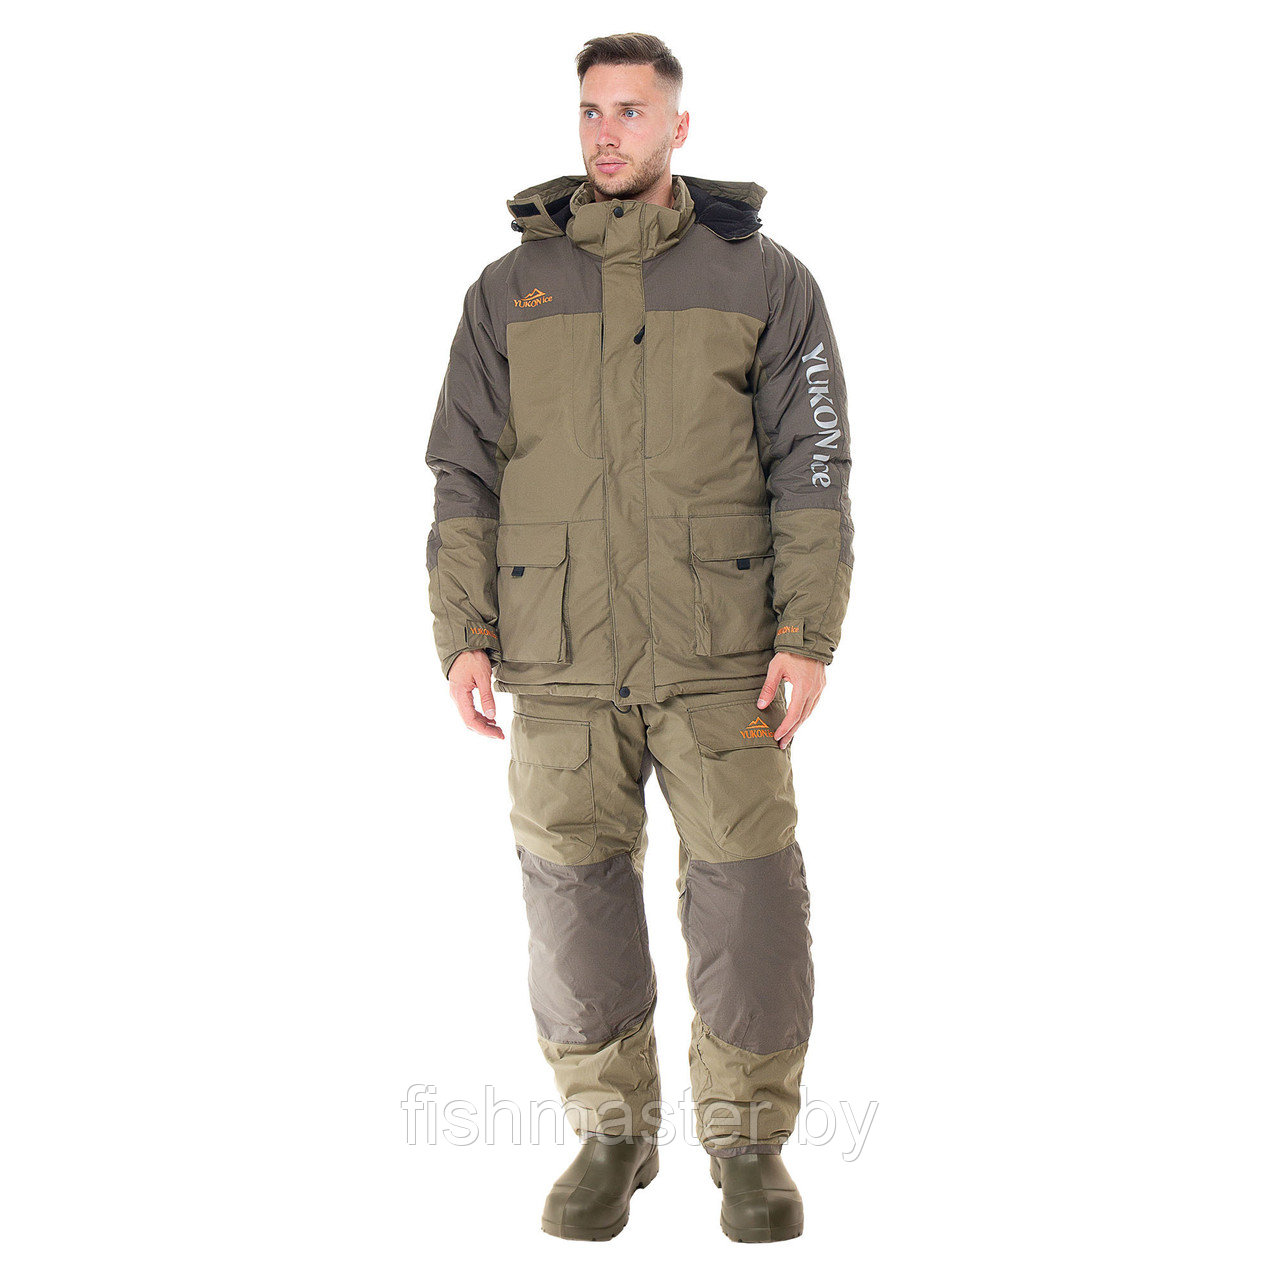 Зимний костюм HUNTSMAN Yukon Ice мембрана 6000/6000 -45°C цвет Хаки ткань Breathable